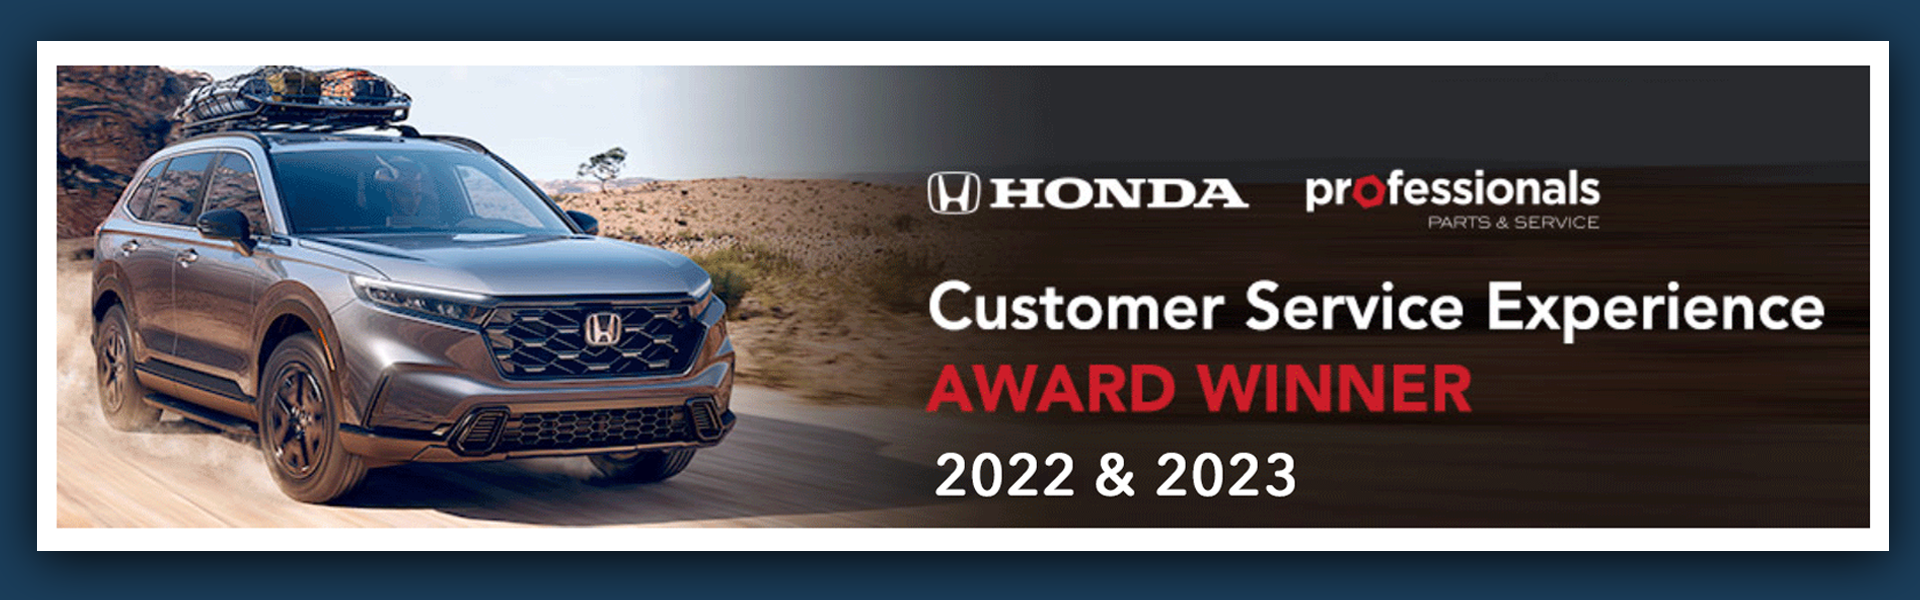 Customer Service Experience award winner 2022 & 2023